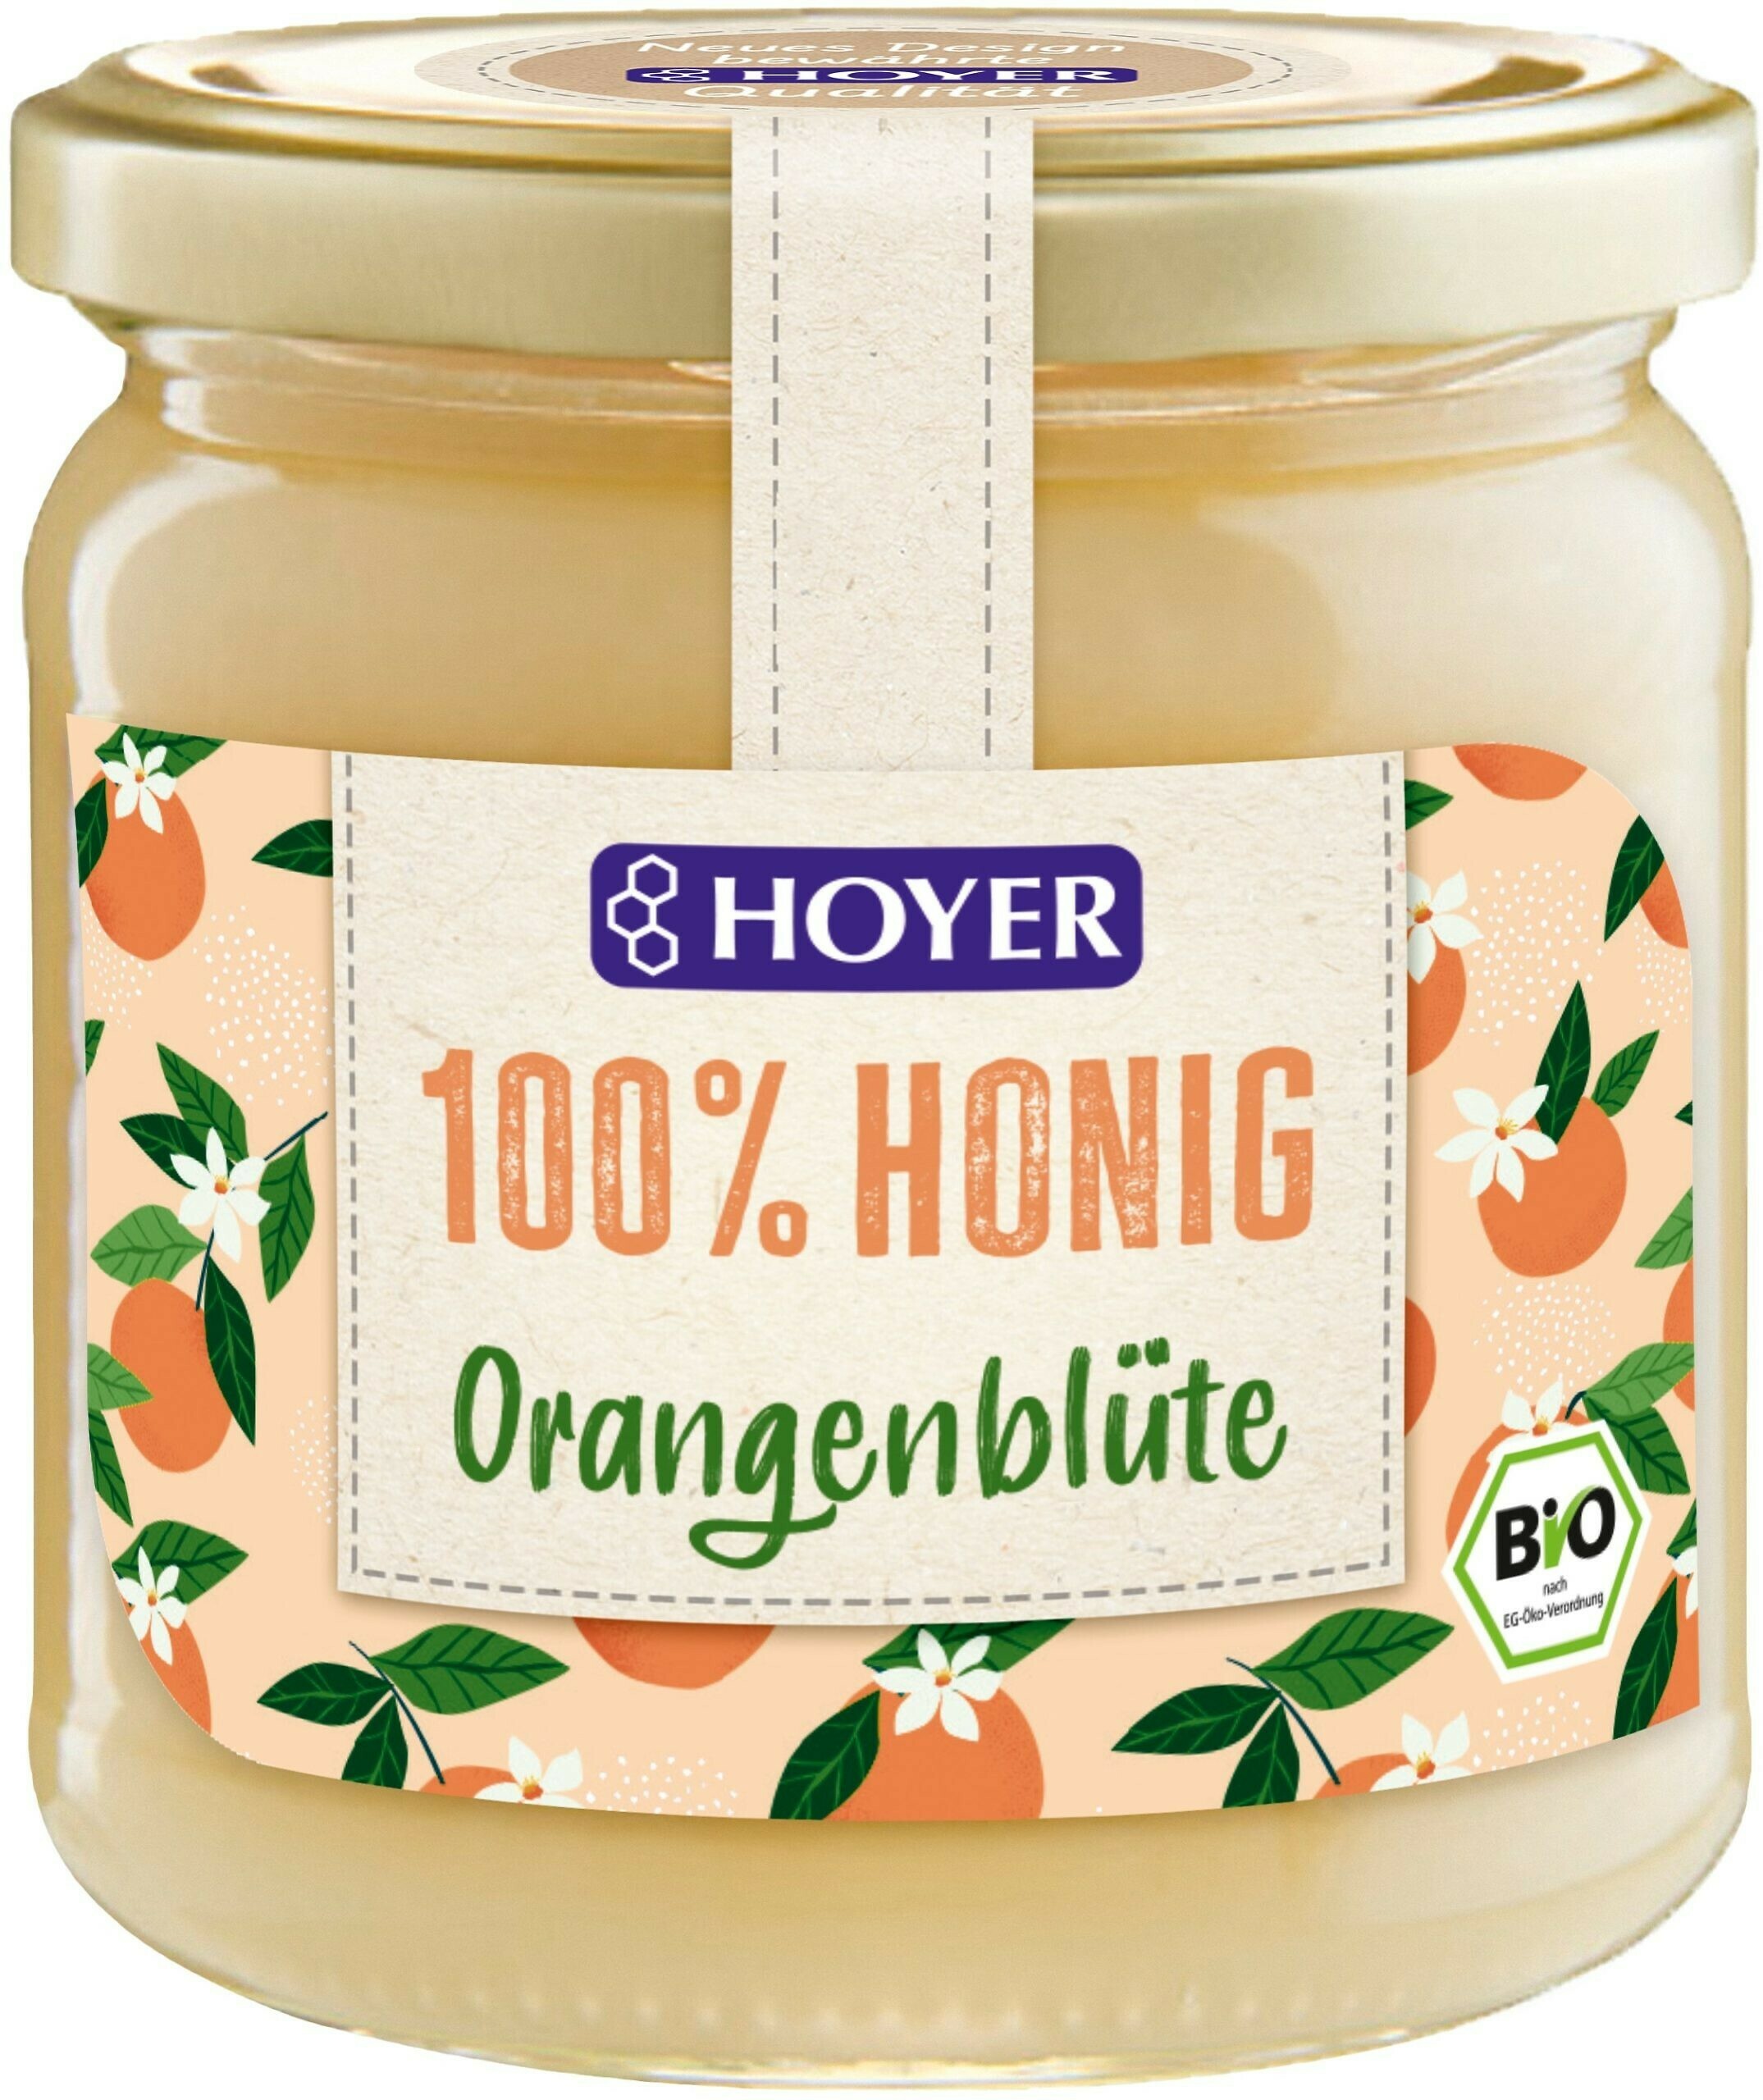 <h2>Miere din flori de portocal bio 500g Hoyer</h2><p>O miere foarte fina si parfumata, adunata cu grija de albine din portocalii din Italia.</p><p><strong>Ingrediente:</strong> 100% miere din flori de portocal*<br />din agricultura ecologica</p><p><strong>Valori nutritionale/100g:</strong><br /><span id="result_box" lang="ro">Energie 1283 kJ / 302 kcal<br /></span>Grasimi &lt;0,1 g din care acizi gra?i satura?i &lt;0,1 g<br />Carbohidra?i 75.1 g din care zaharuri 71 g<br />Proteine 0.4 g<br />Saruri &lt;1,0 g</p><p>Produs certificat ecologic</p><p>500g borcan de sticla</p>